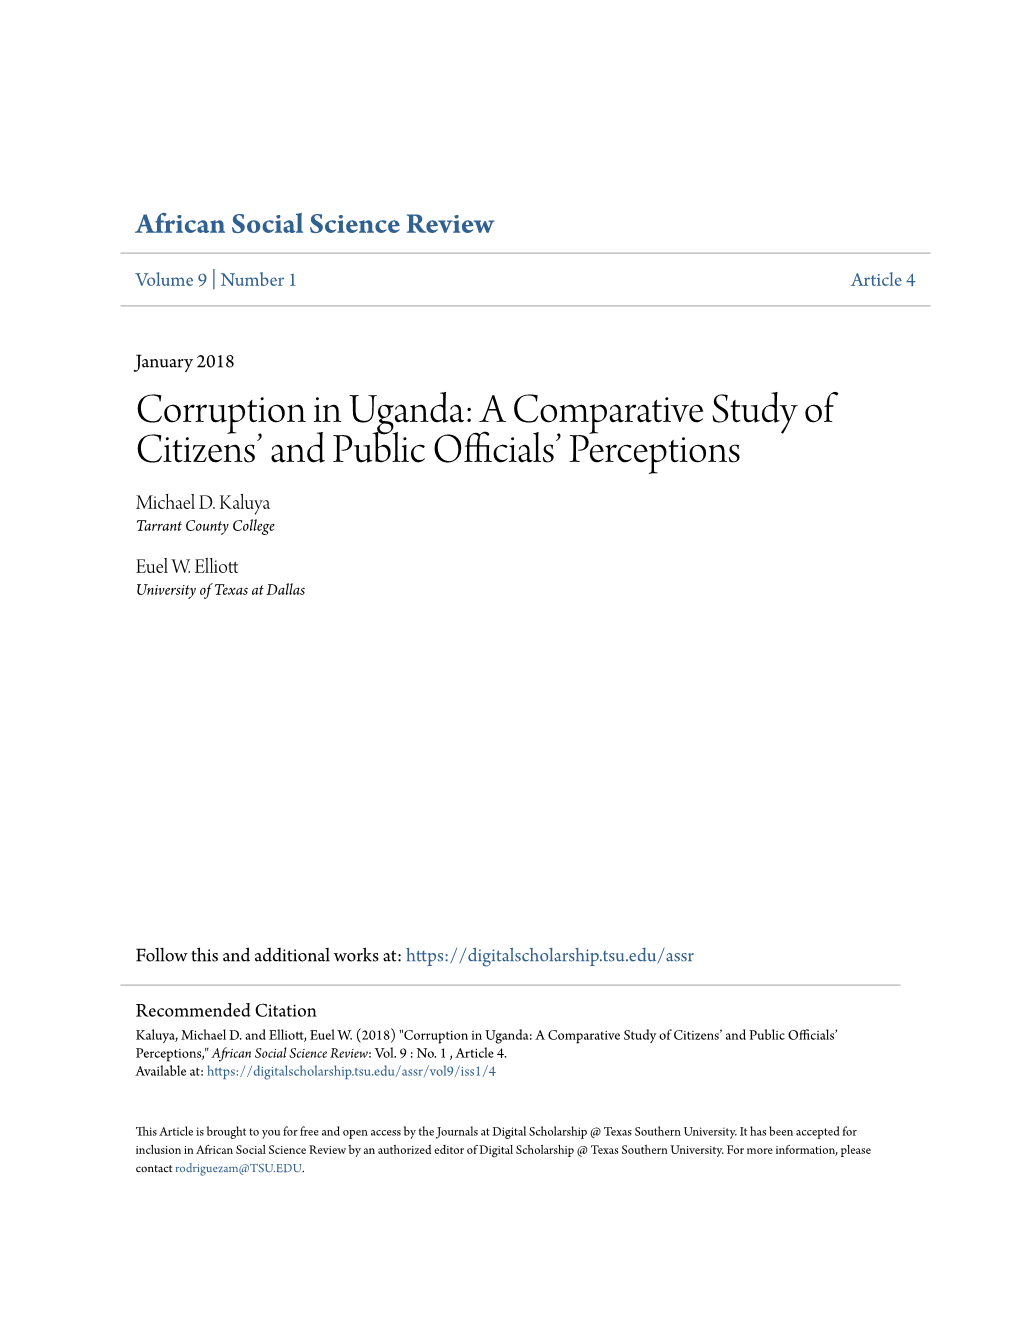 Corruption in Uganda: a Comparative Study of Citizens’ and Public Officials’ Perceptions Michael D